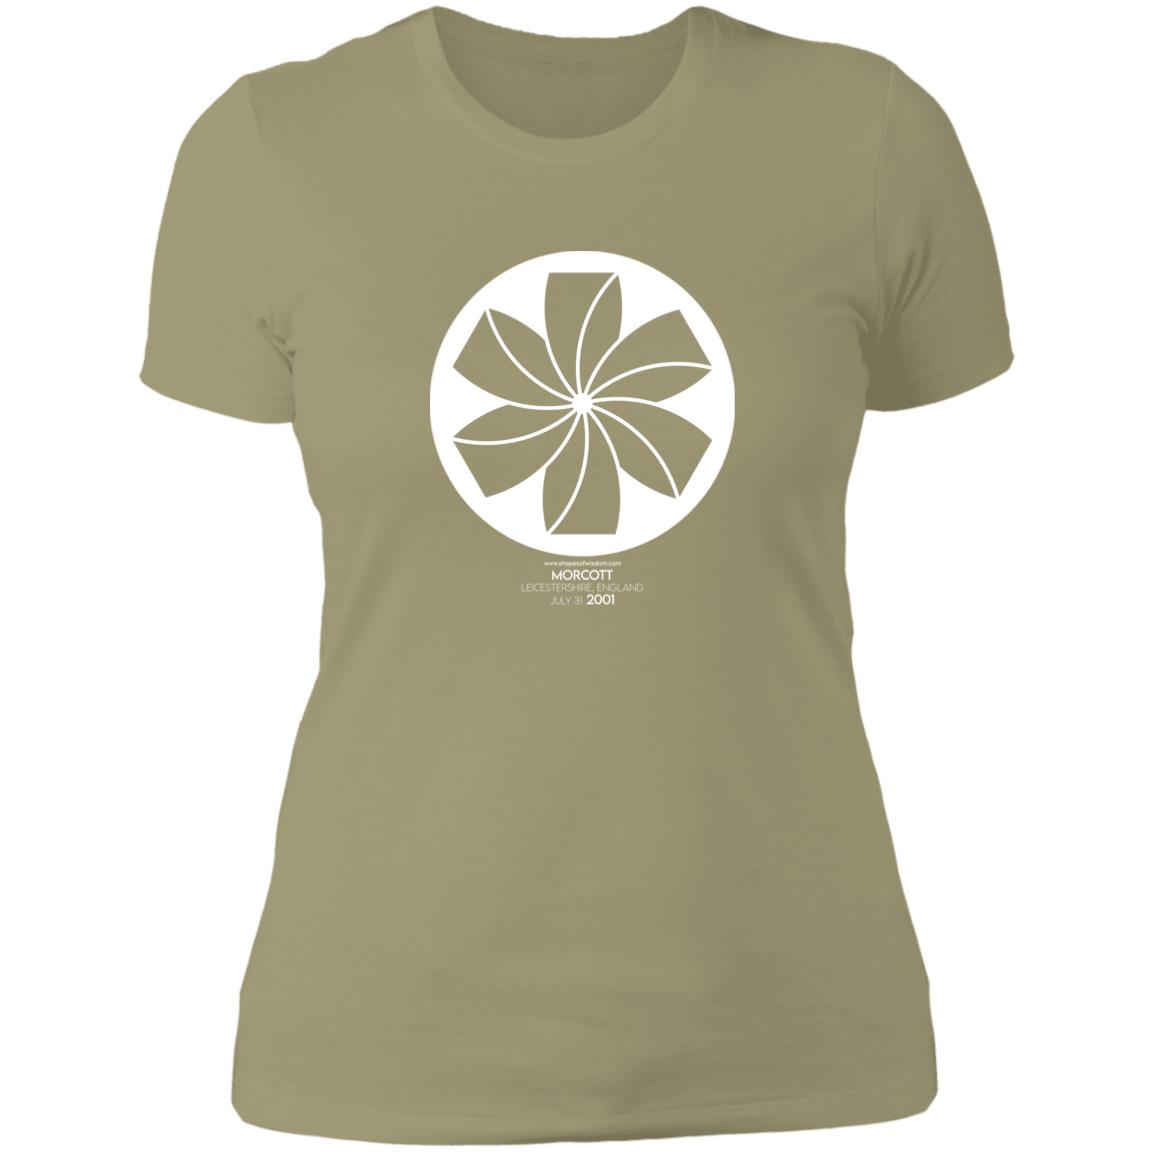 Crop Circle Basic T-Shirt - Morcott